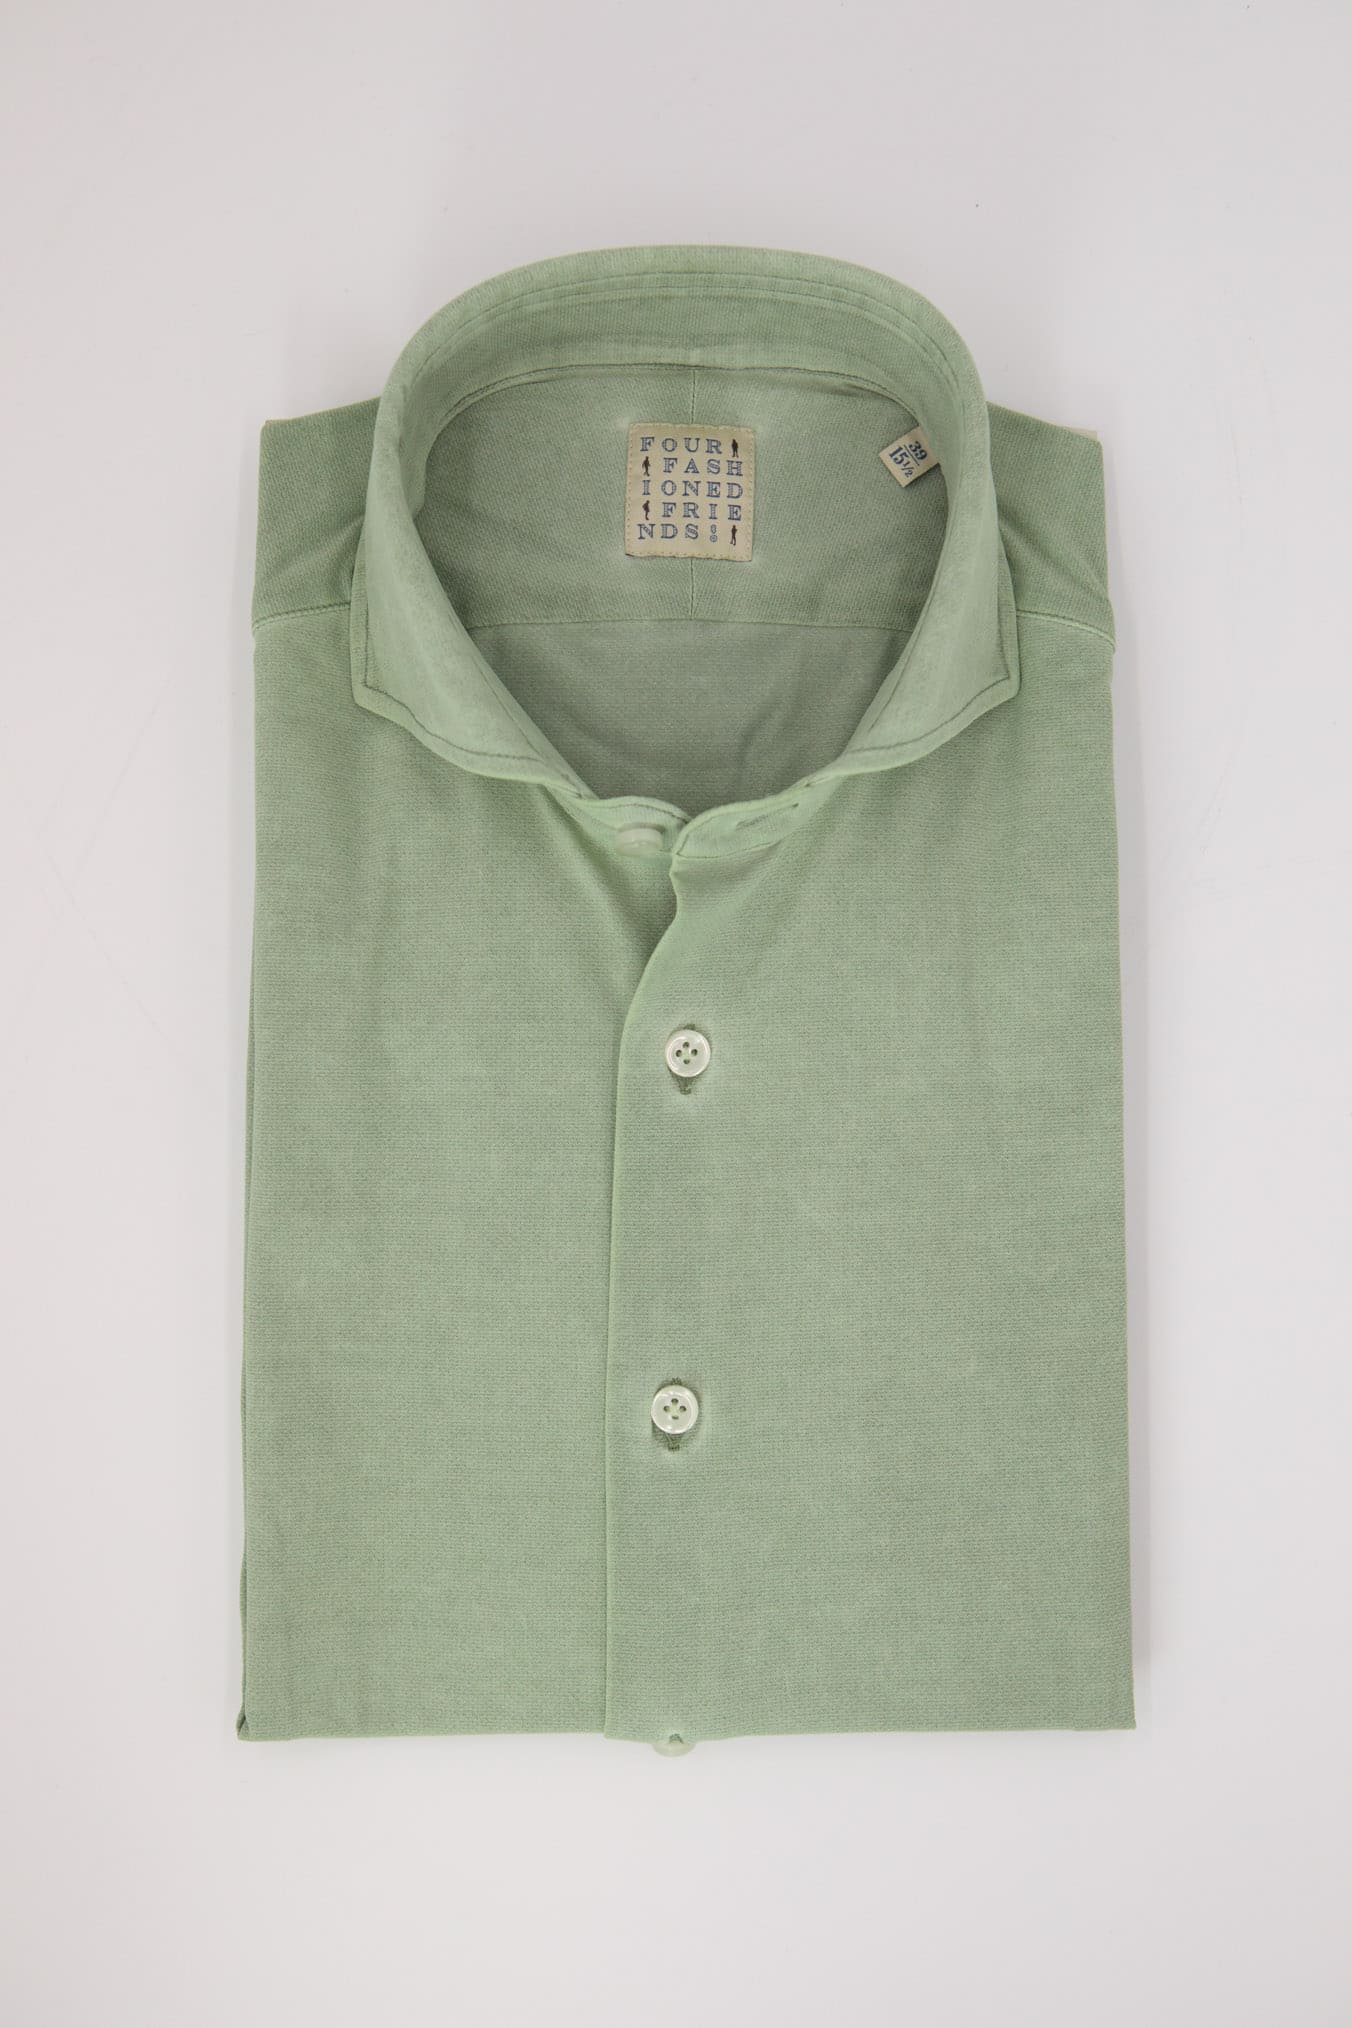 FFF Active Delavé Shirt Green Sage